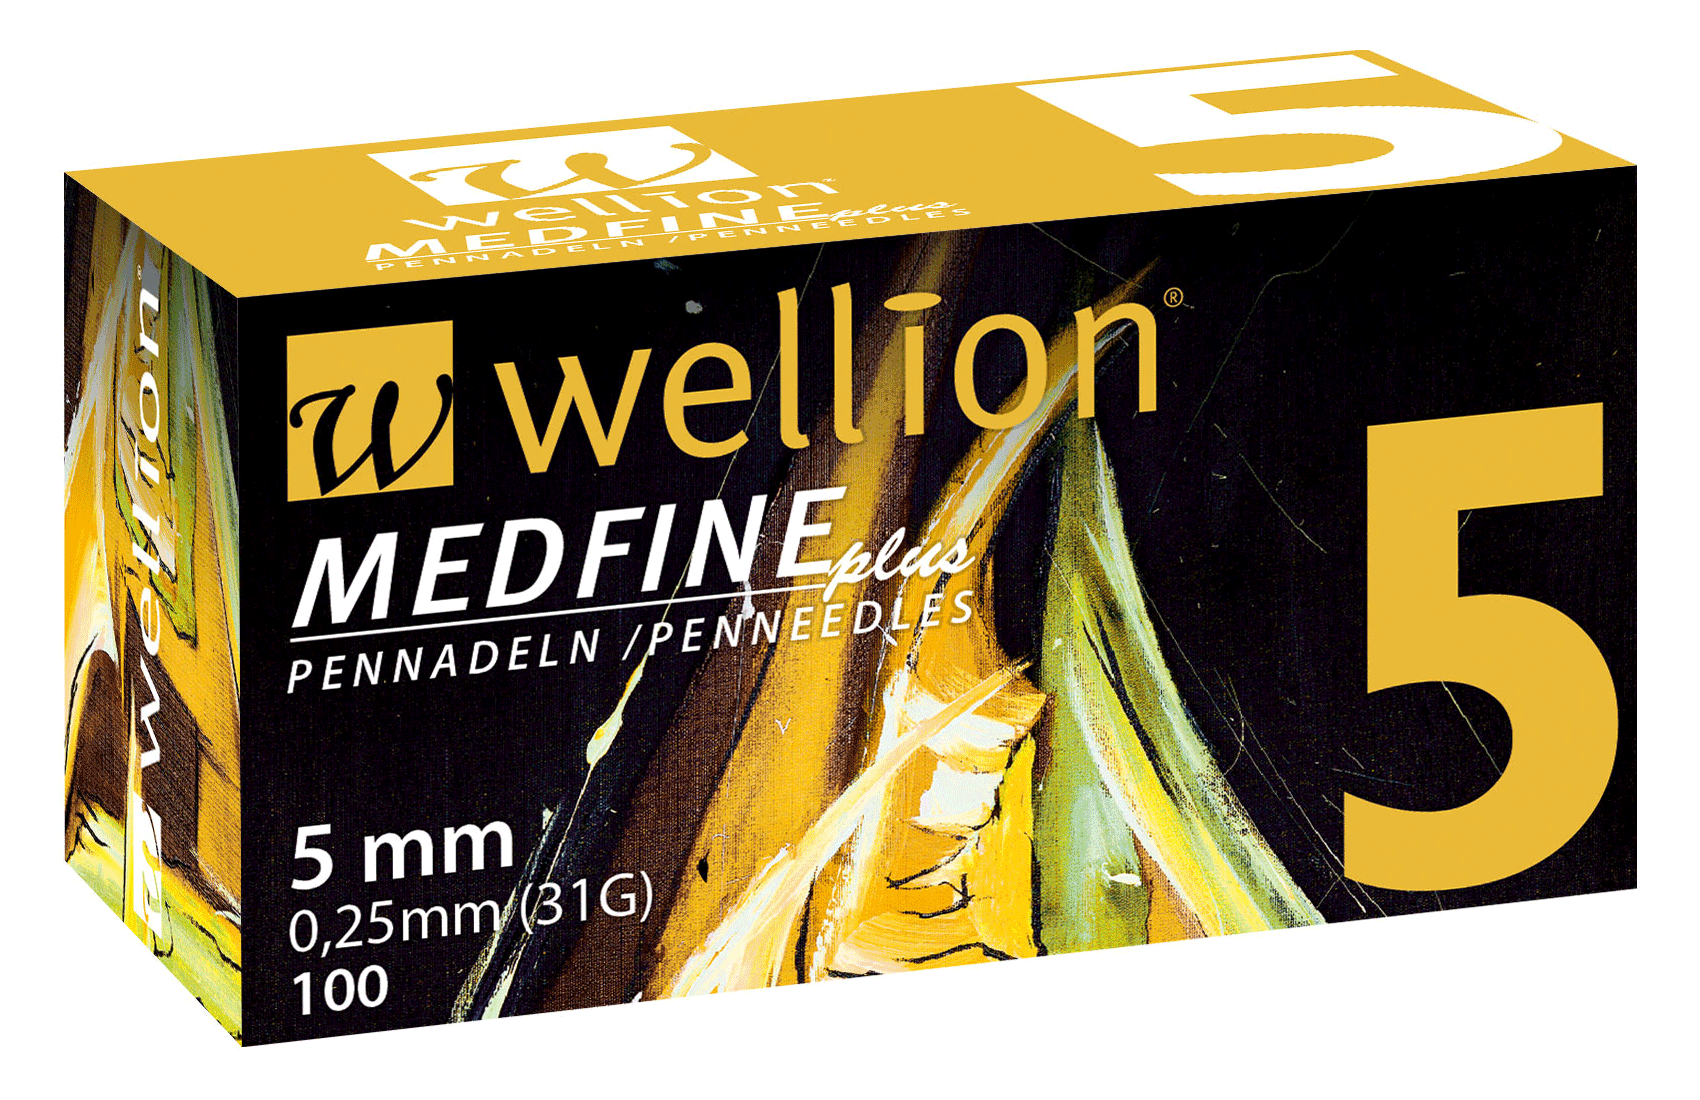 WELL105 Wellion MEDFINE plus Pennadeln, 5 mm, 100 Stück